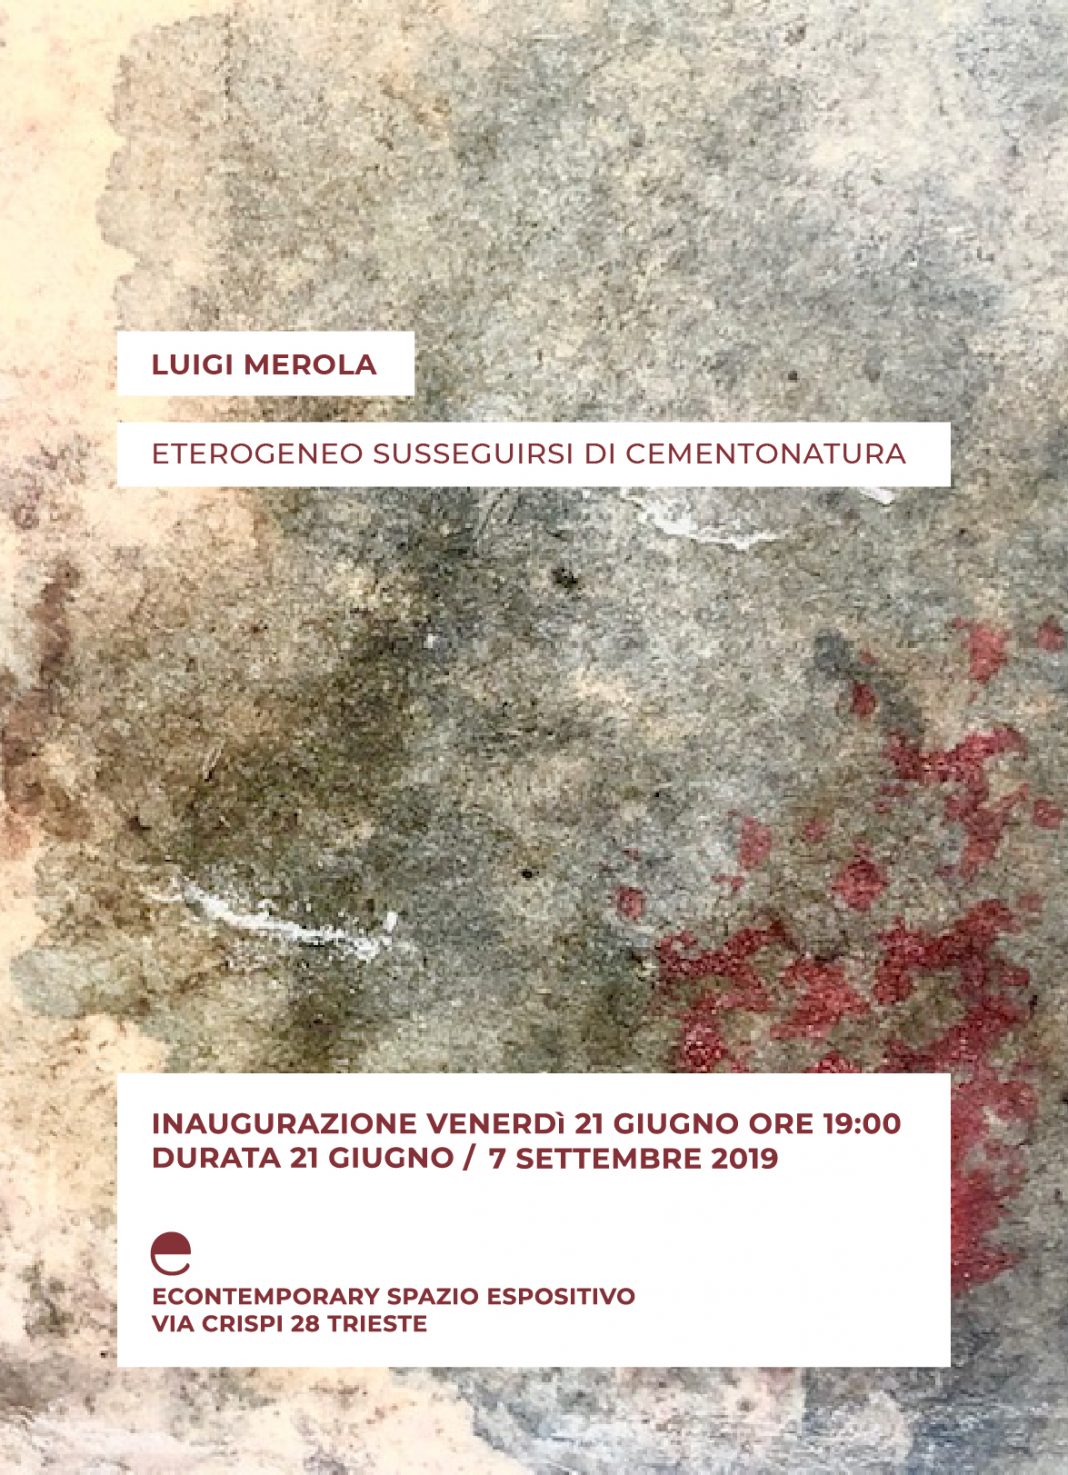 Luigi Merola – Eterogeneo susseguirsi di cementonaturahttps://www.exibart.com/repository/media/eventi/2019/06/luigi-merola-8211-eterogeneo-susseguirsi-di-cementonatura-12-1068x1475.jpg